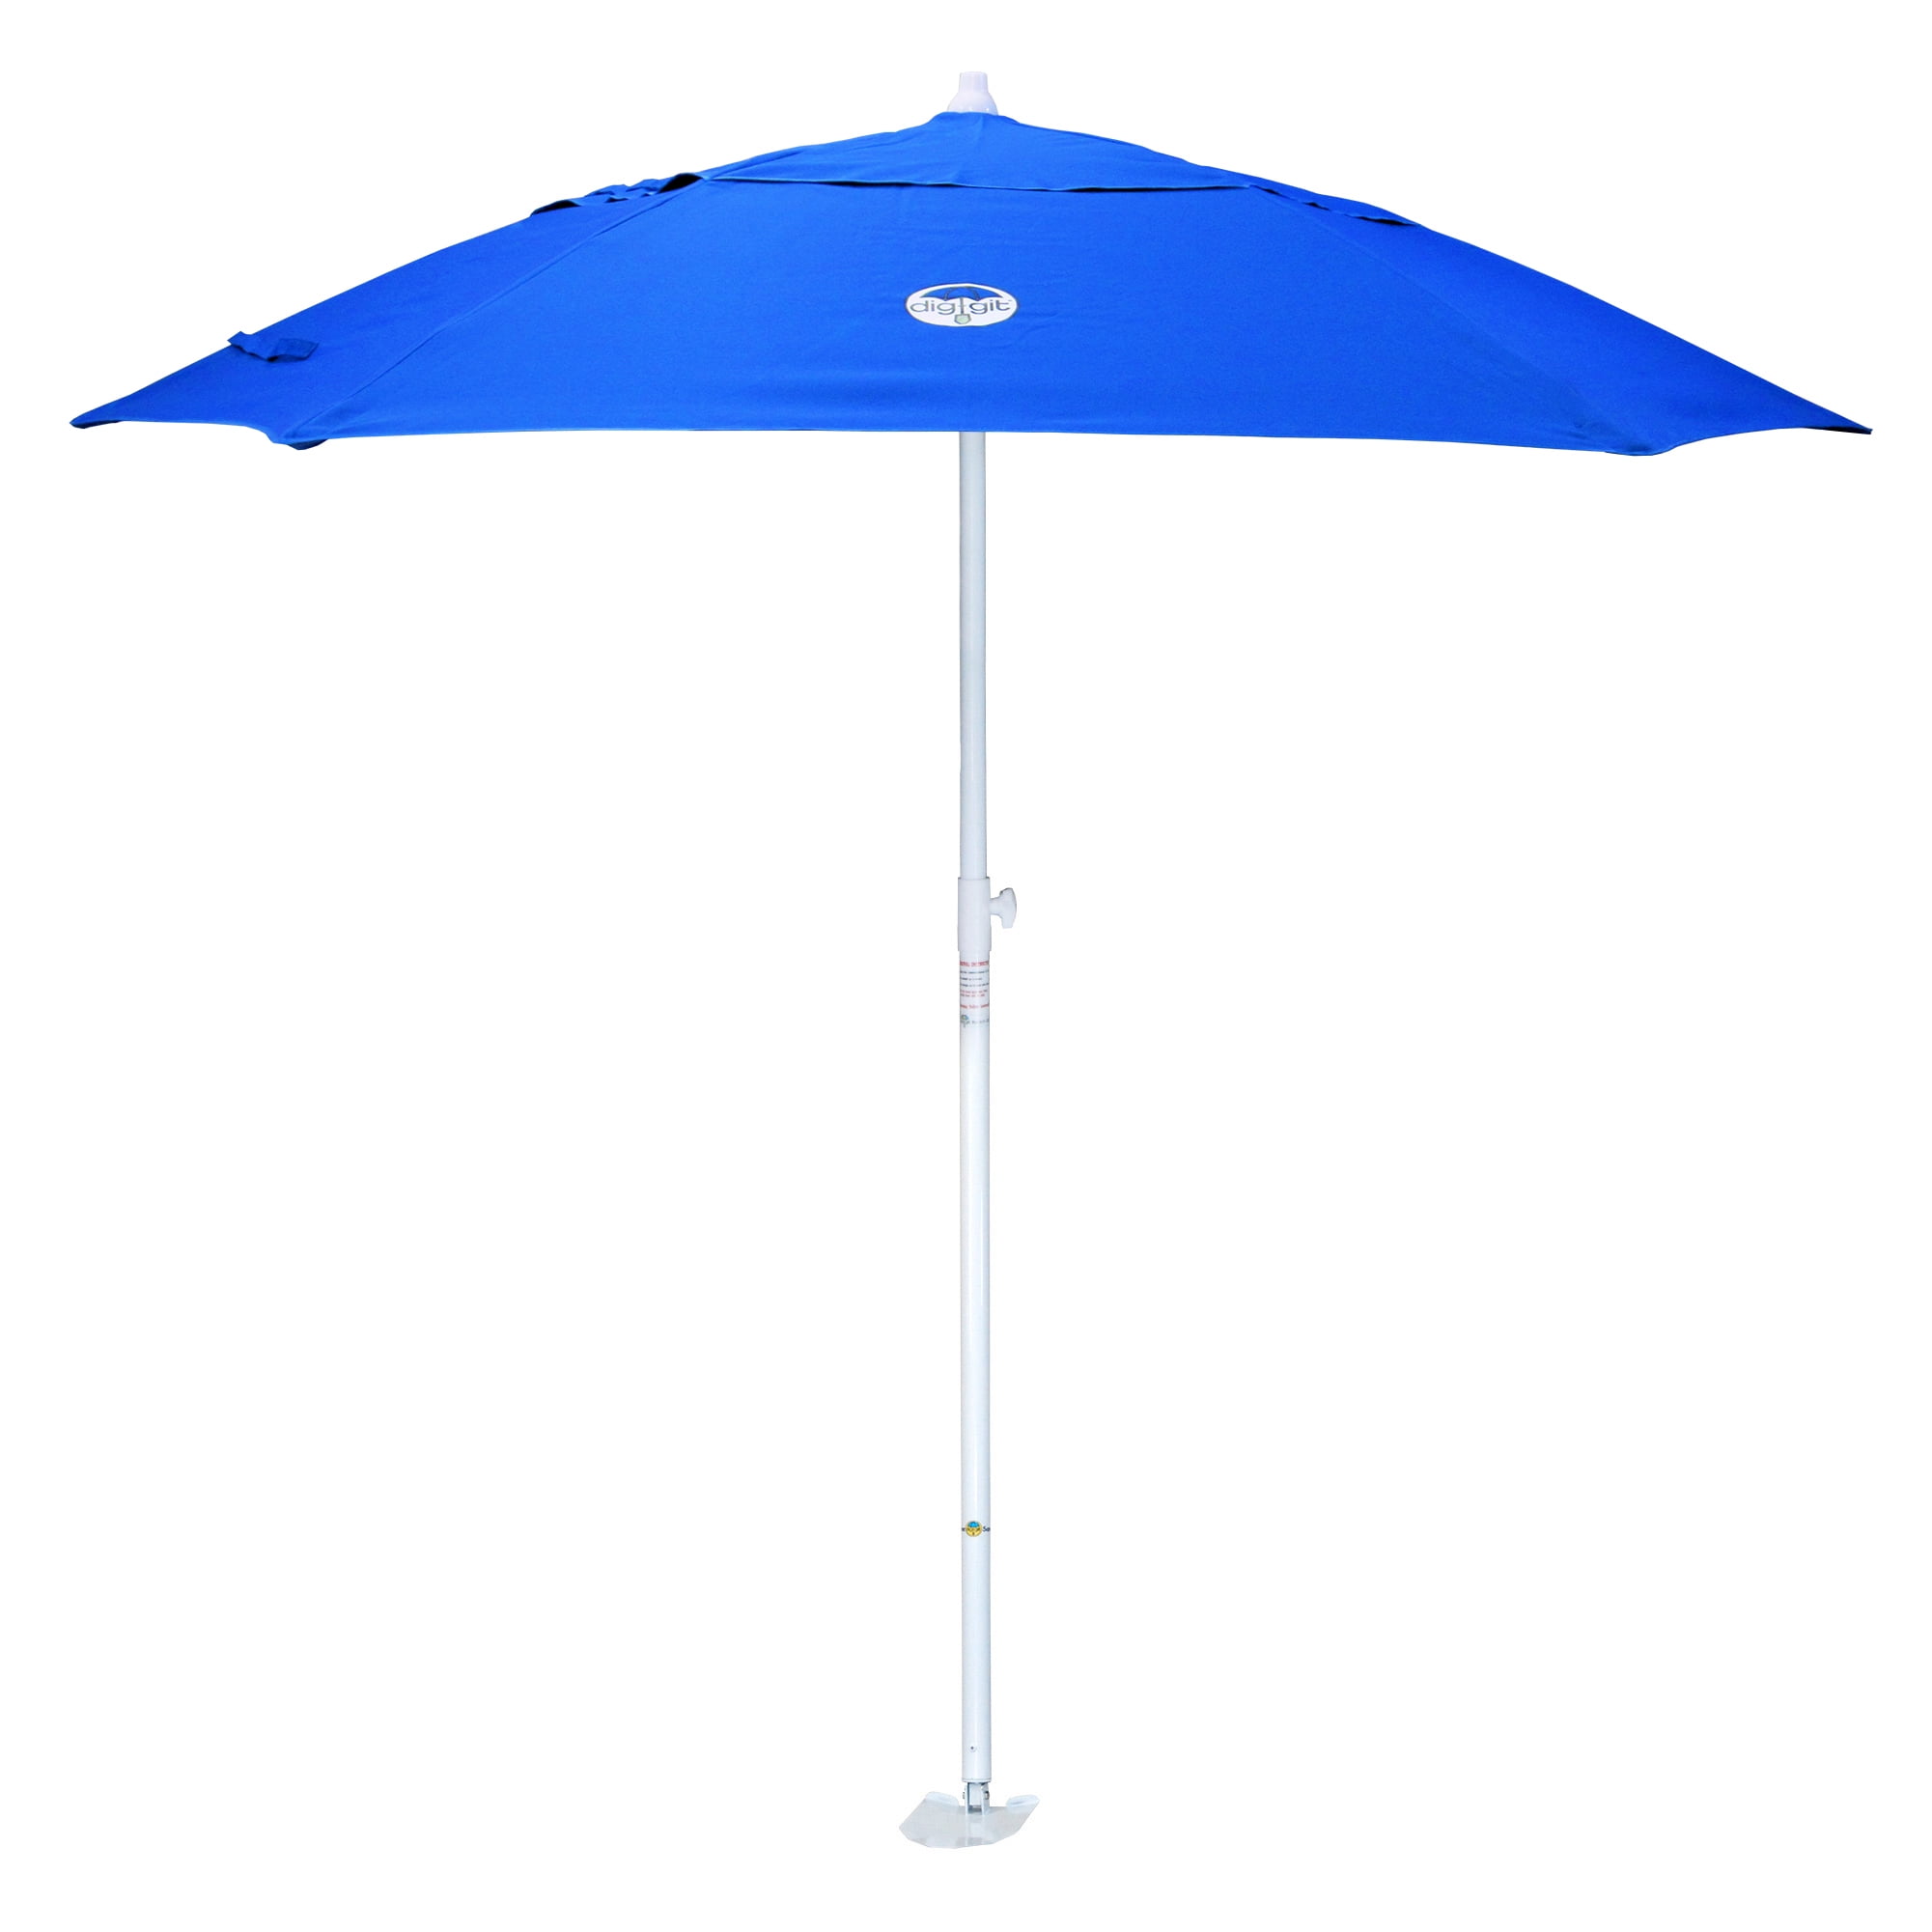 New Nautica Beach Umbrella 7' w/ Shoulder Strap Asst 6 Styles New w/ Tags 